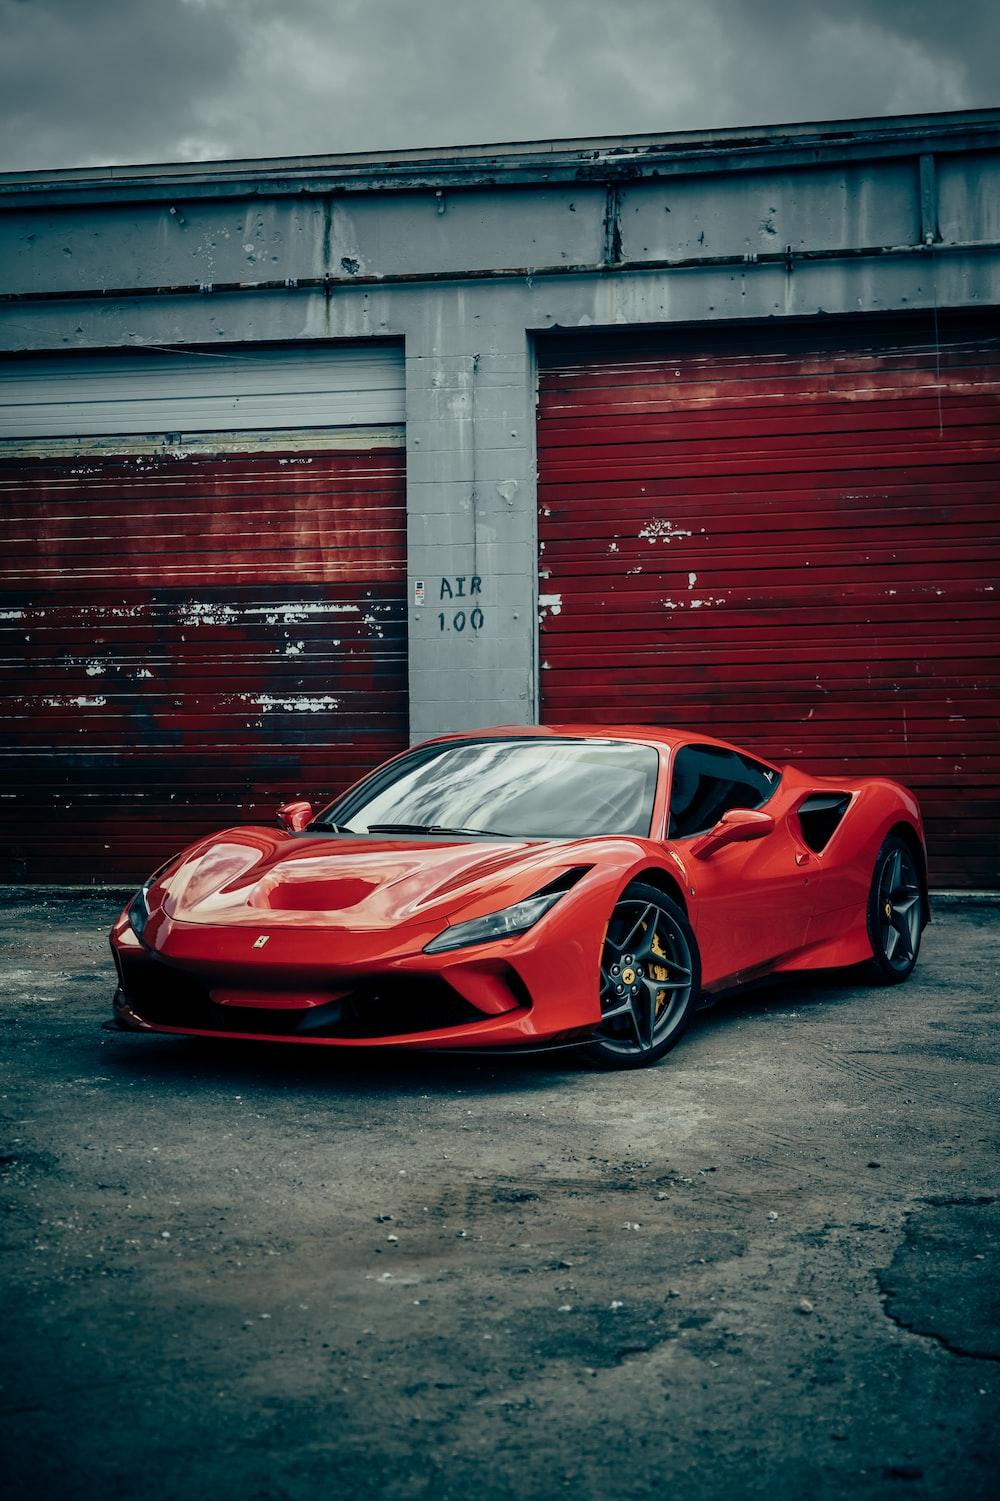 Red Ferrari Italia Parked Beside Wall Photo Car